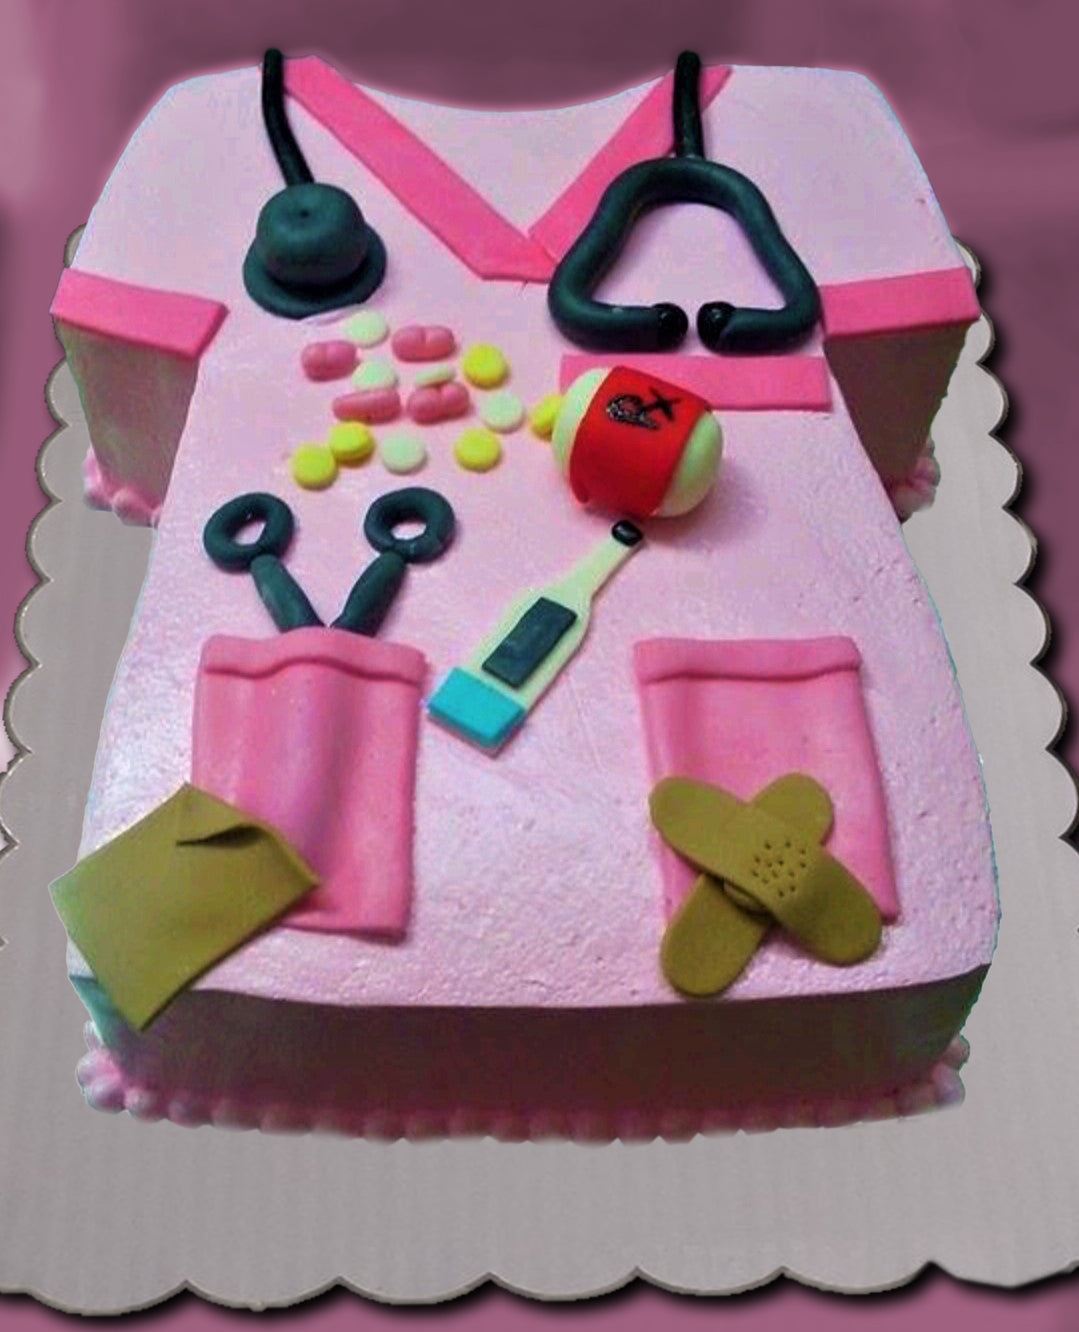 Nurse Cake | Maria Letizia Bruno | Flickr